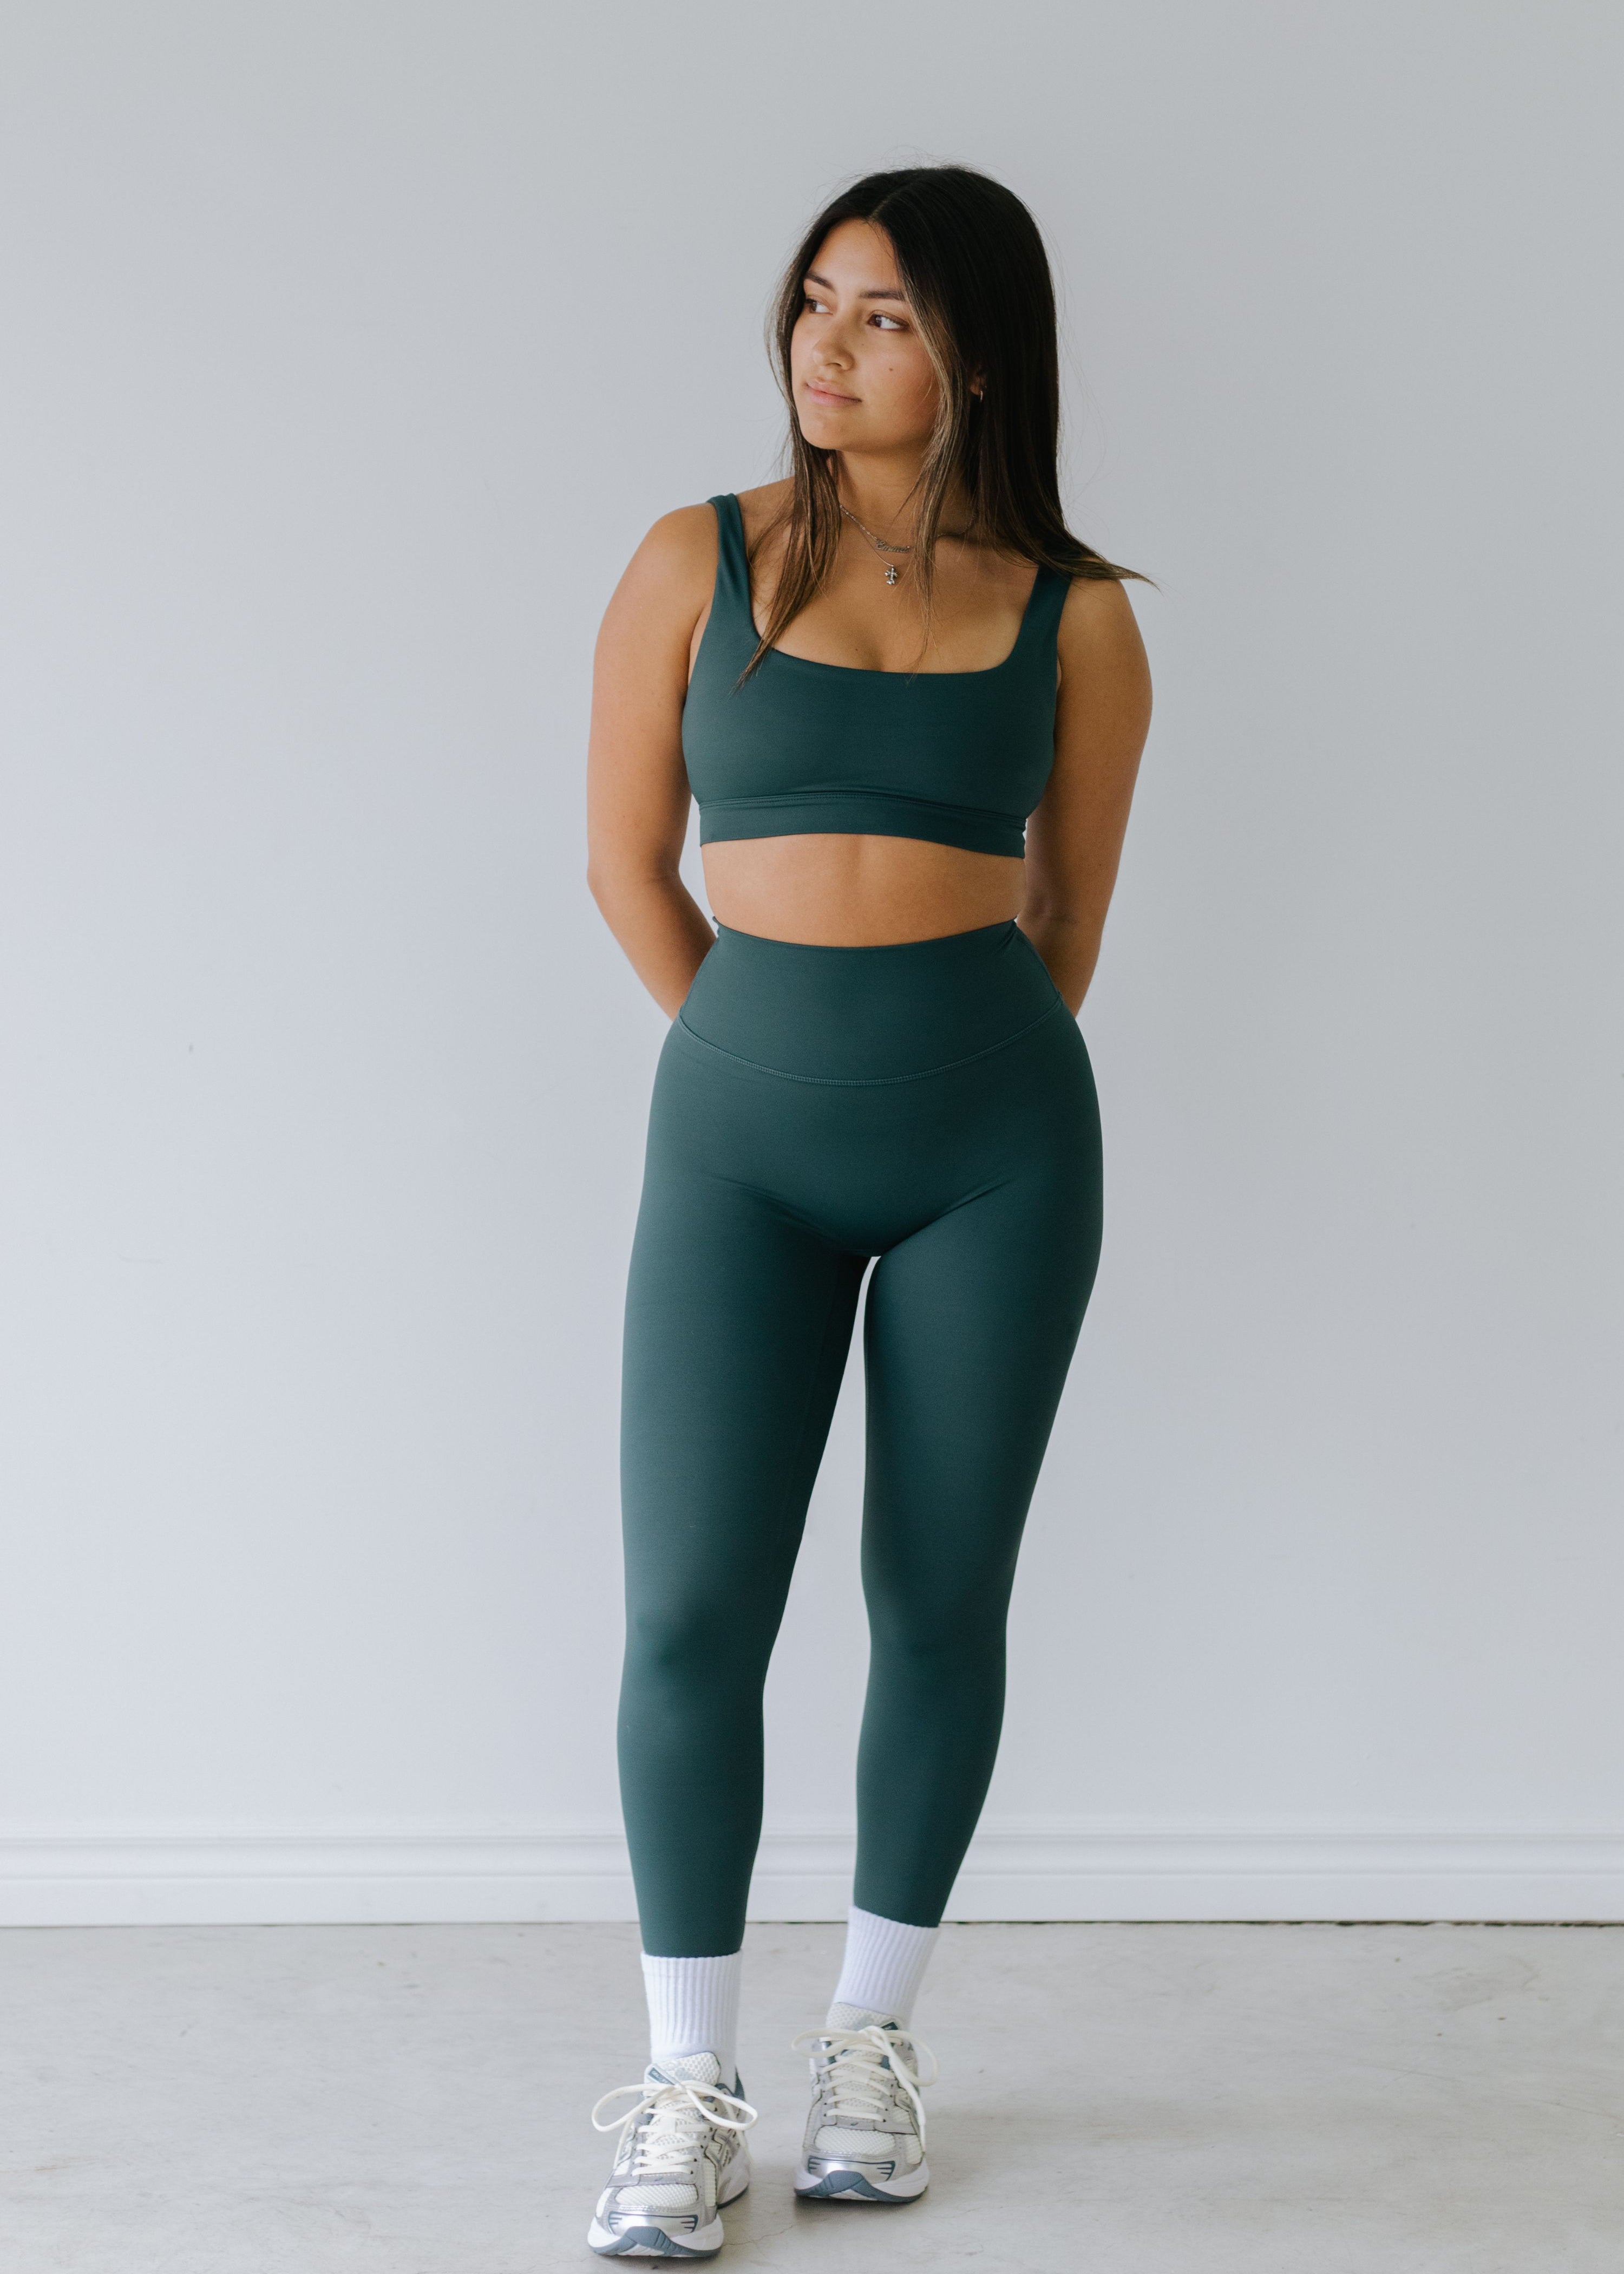 Form Bra in Evergreen – Suav activewear